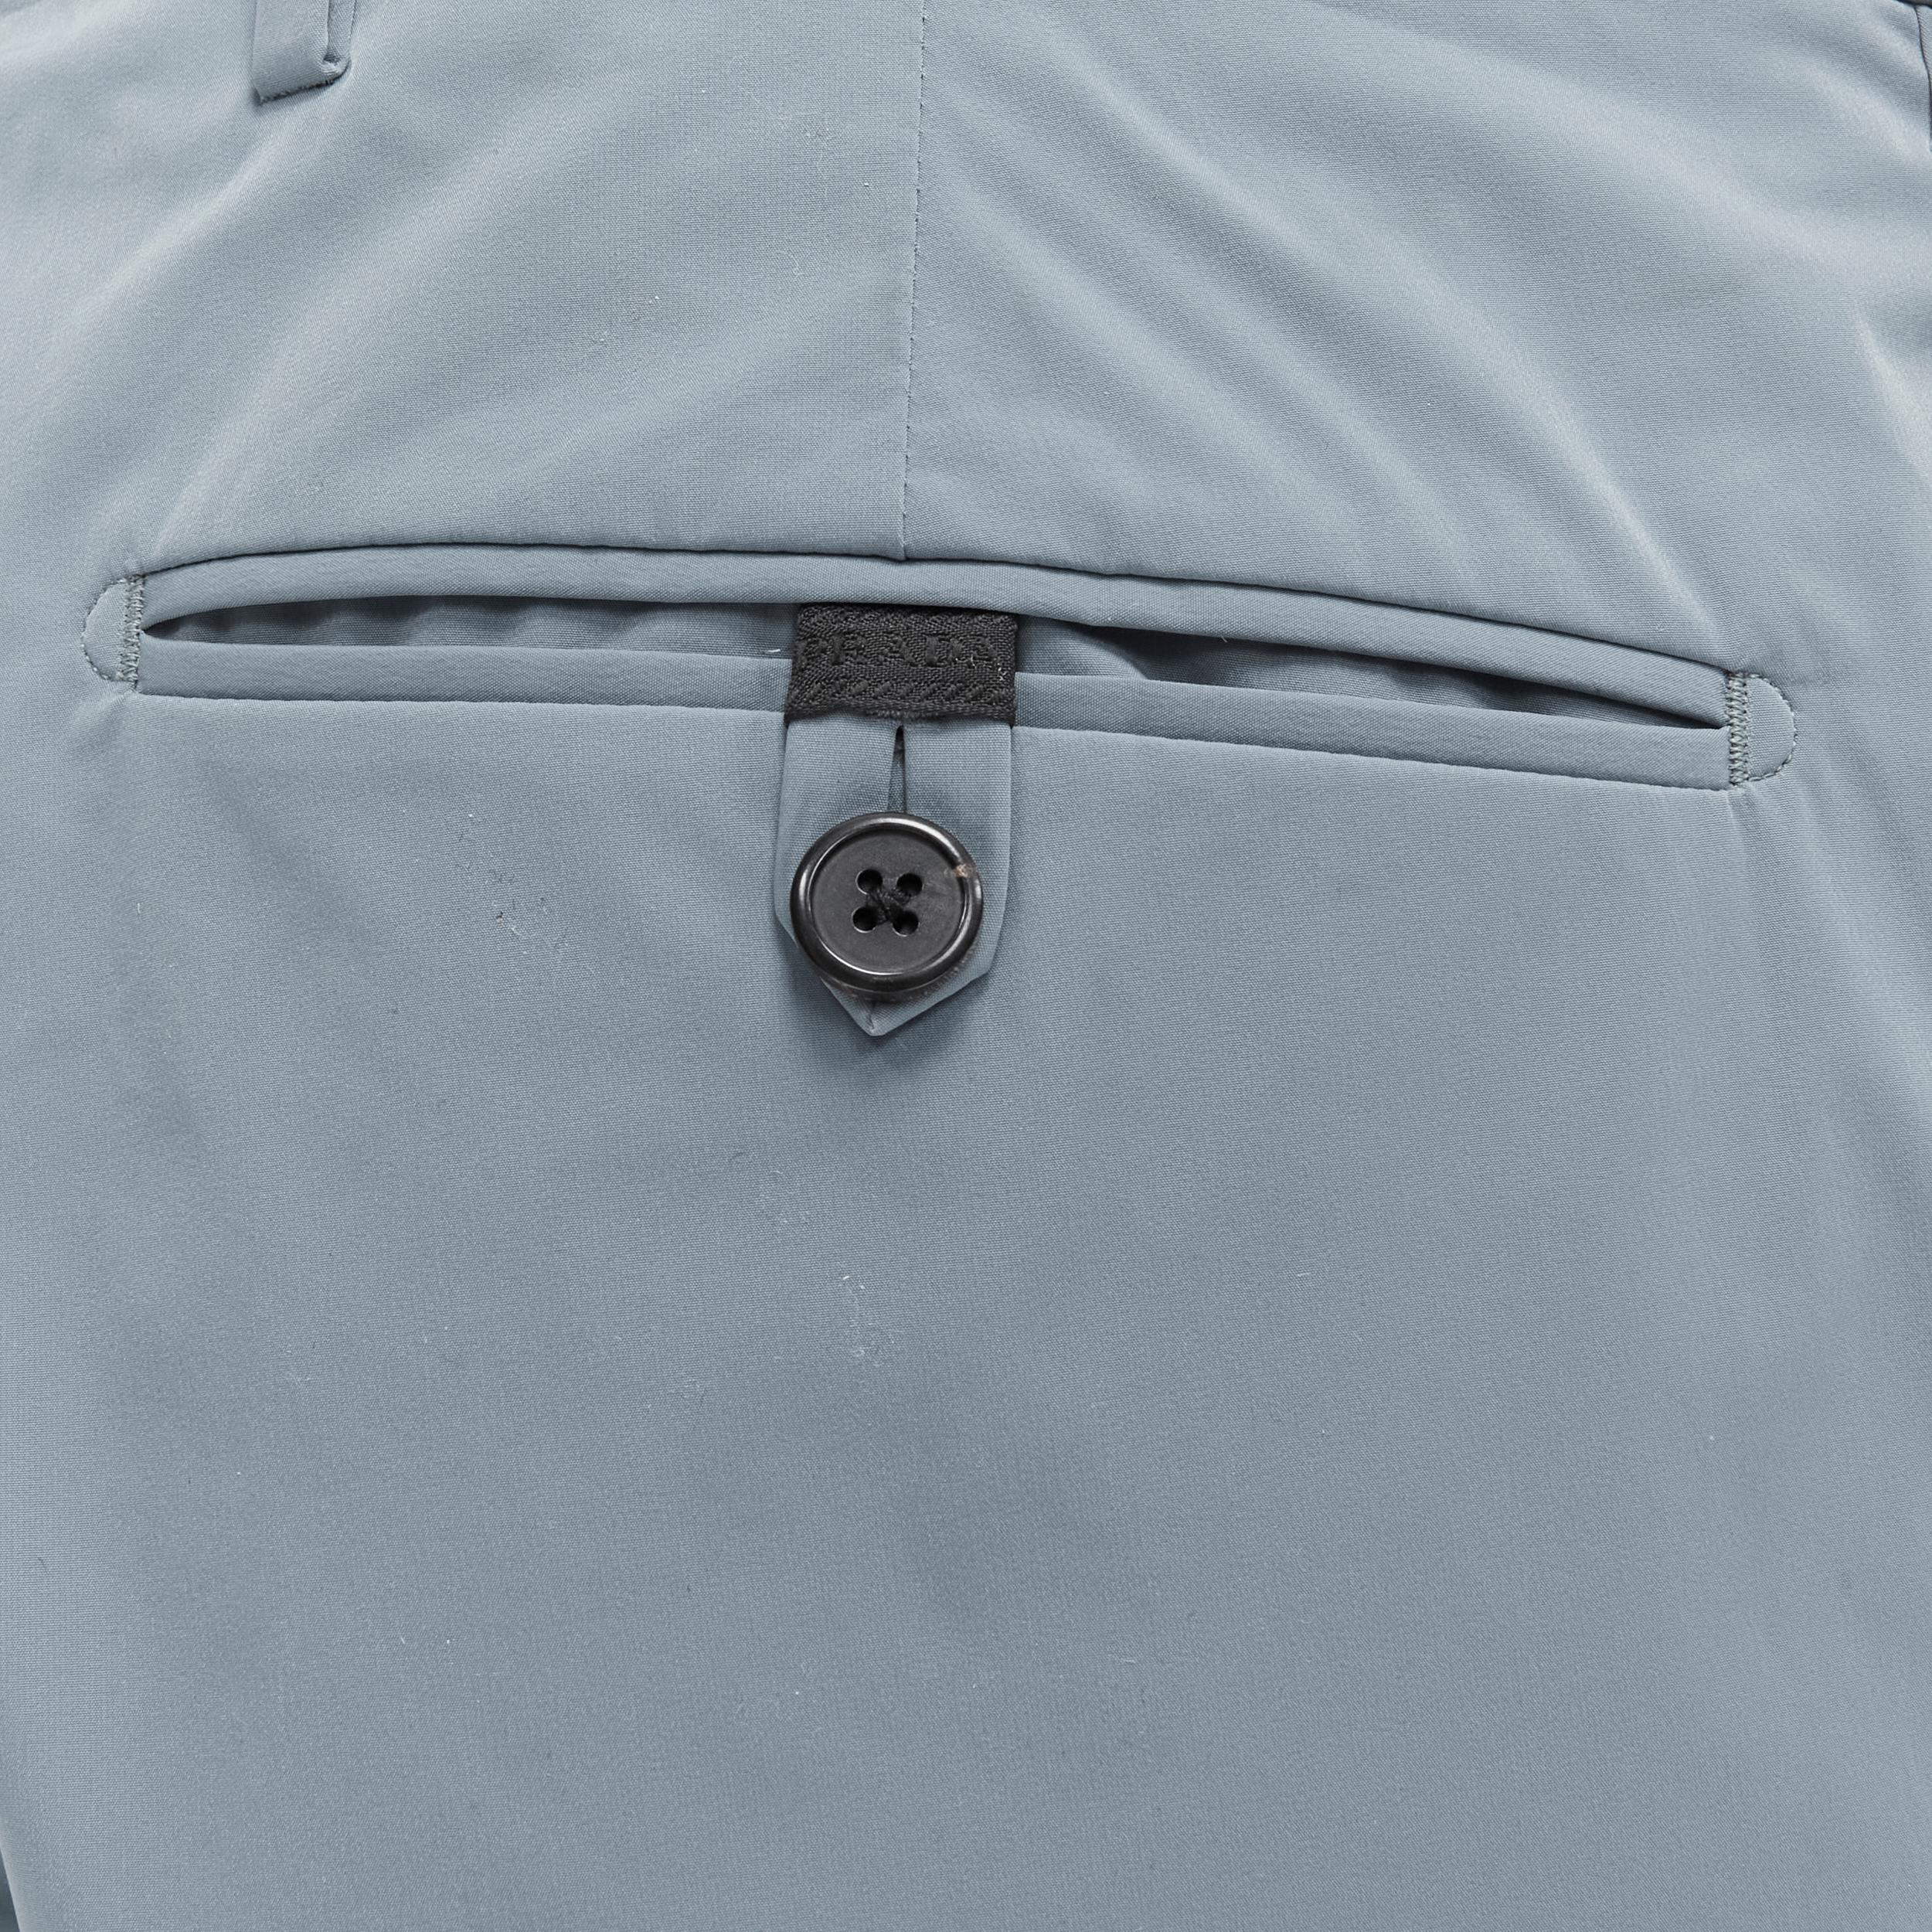 PRADA 2017 teal blue polyester blend logo tag back pocket trousers pants IT48 M 2